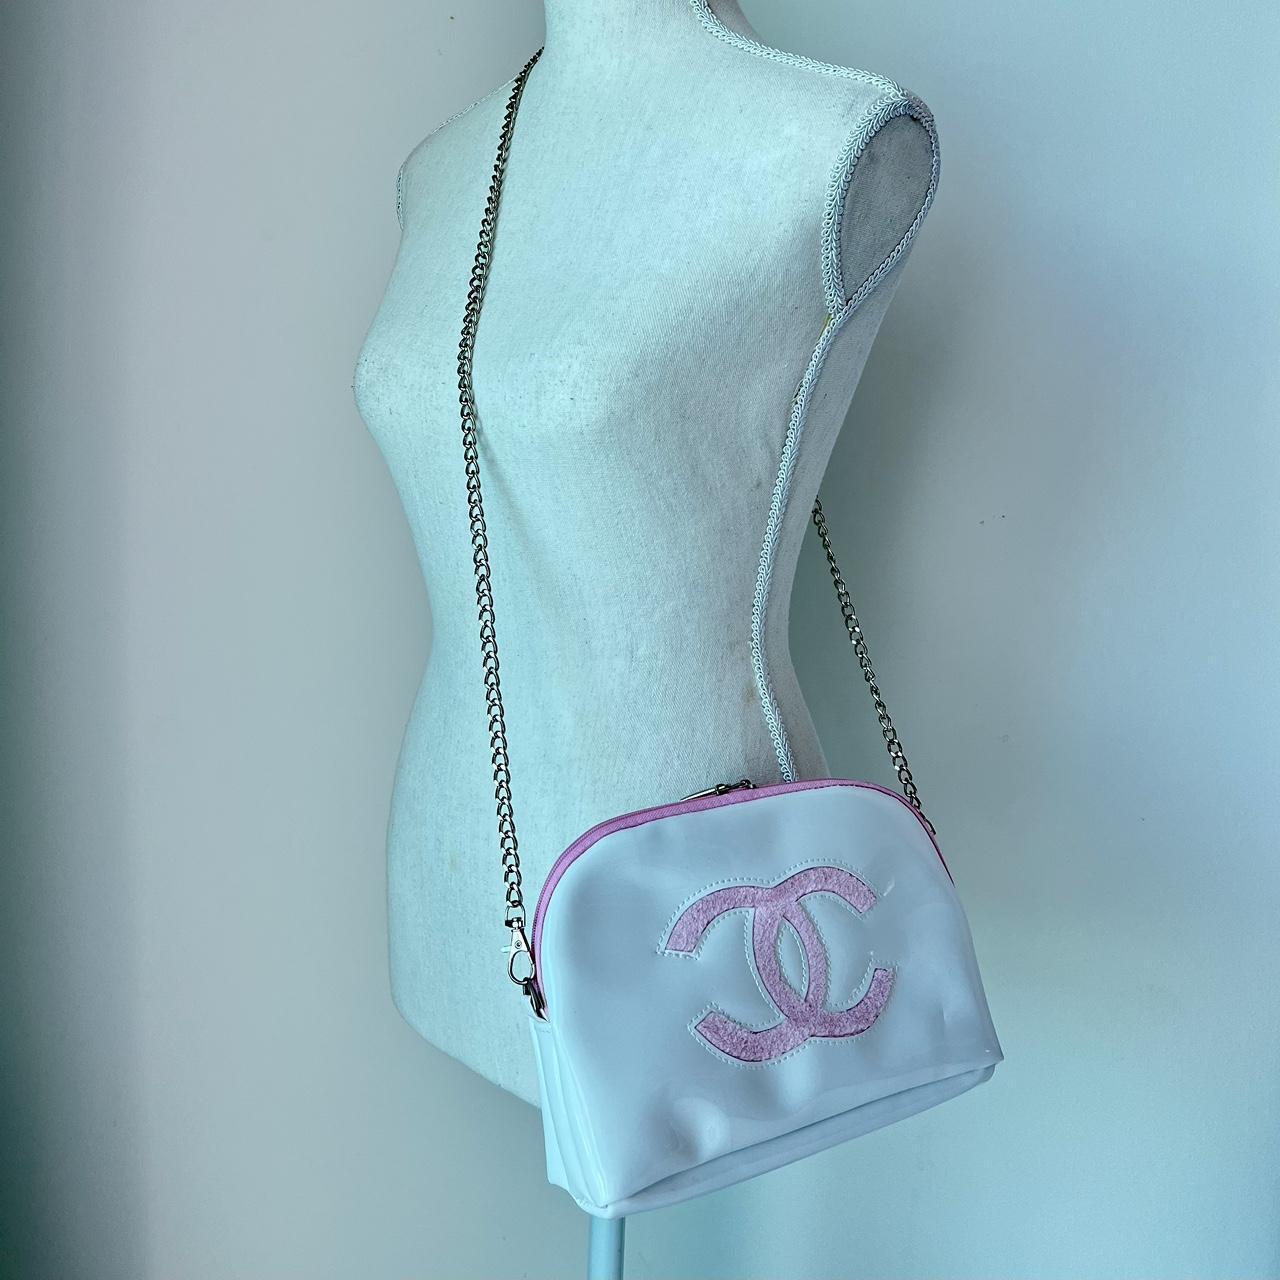 V bag! ✨ Chanel VIP precision, lets bring this bag to ✨CONCERT